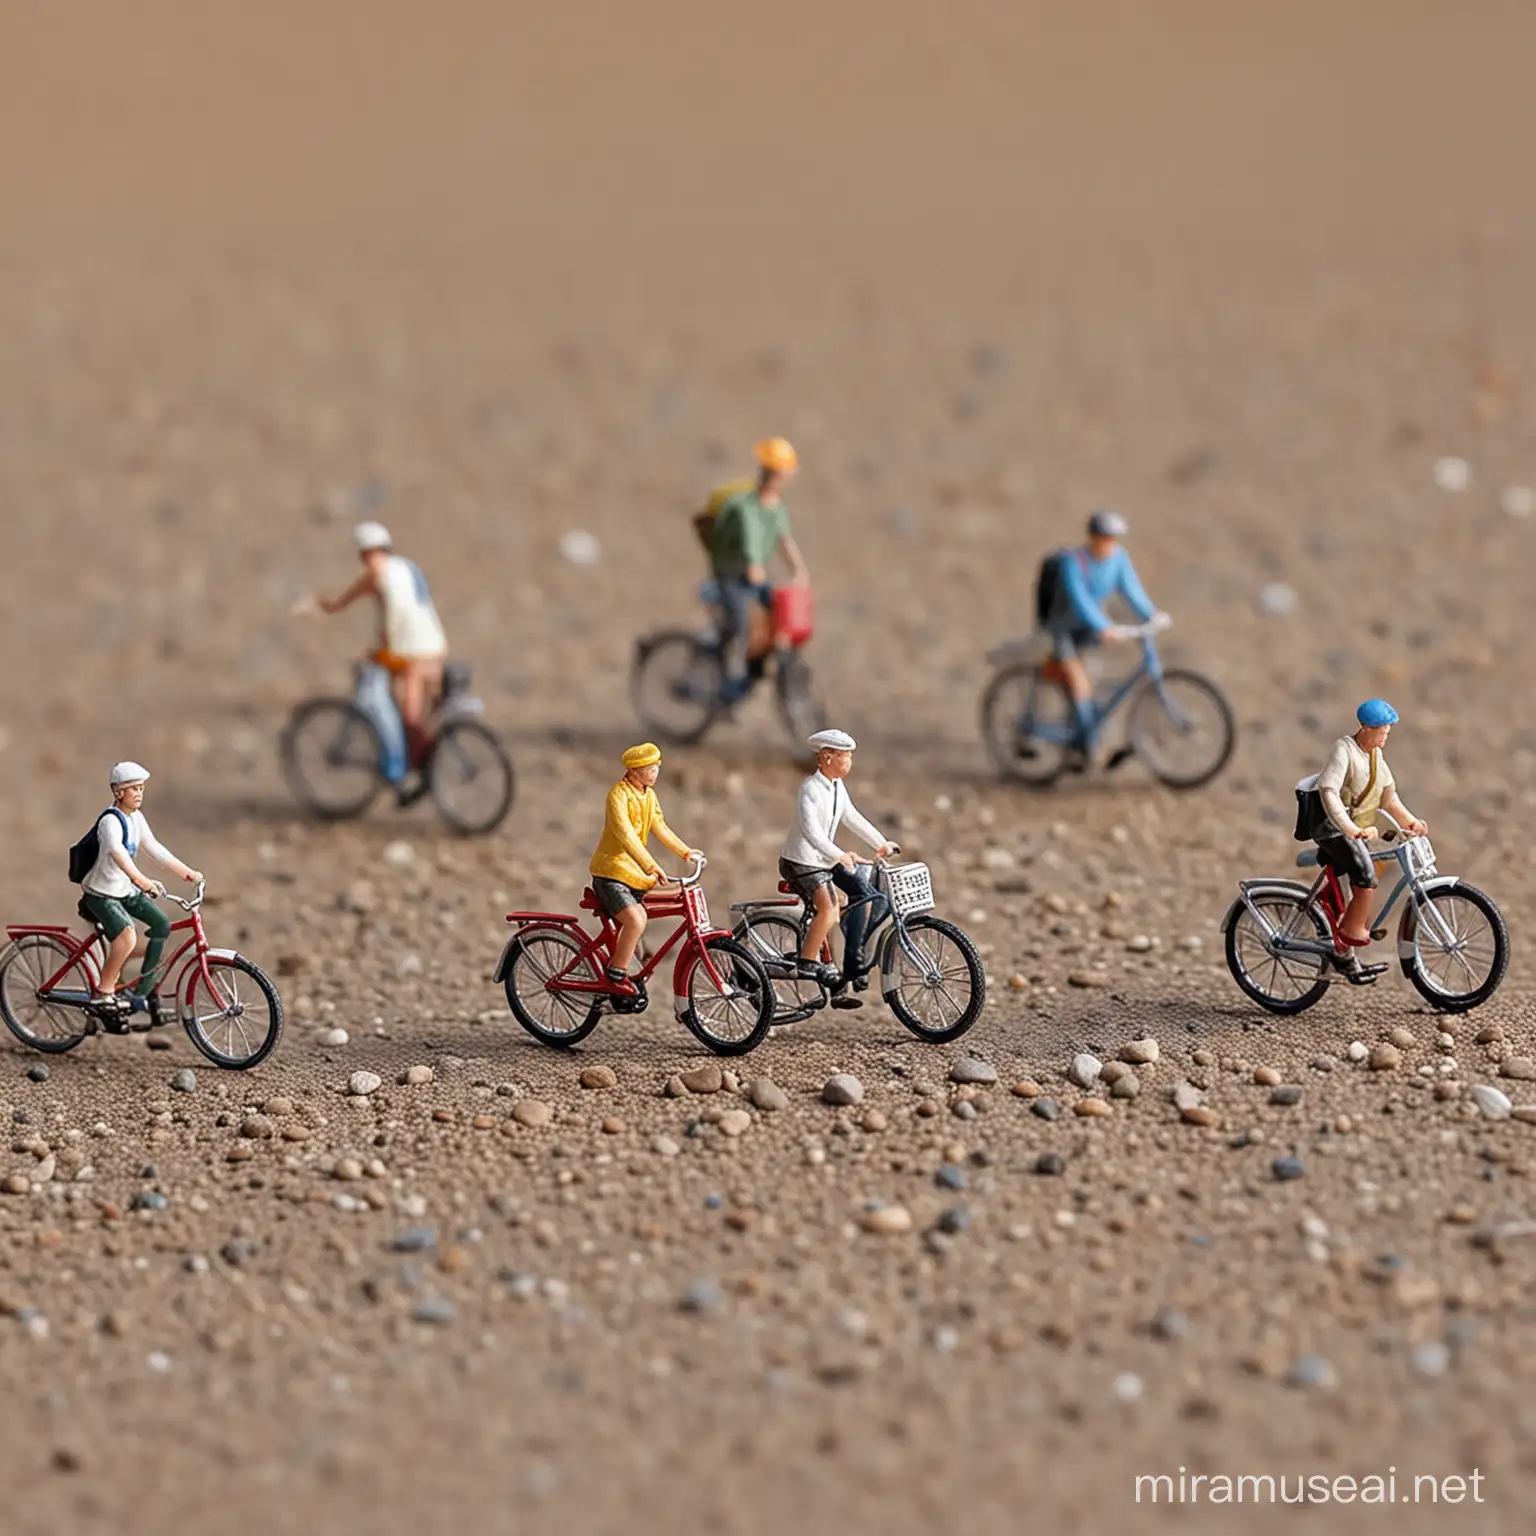 Charming Miniature Cyclists on Whimsical Urban Adventure